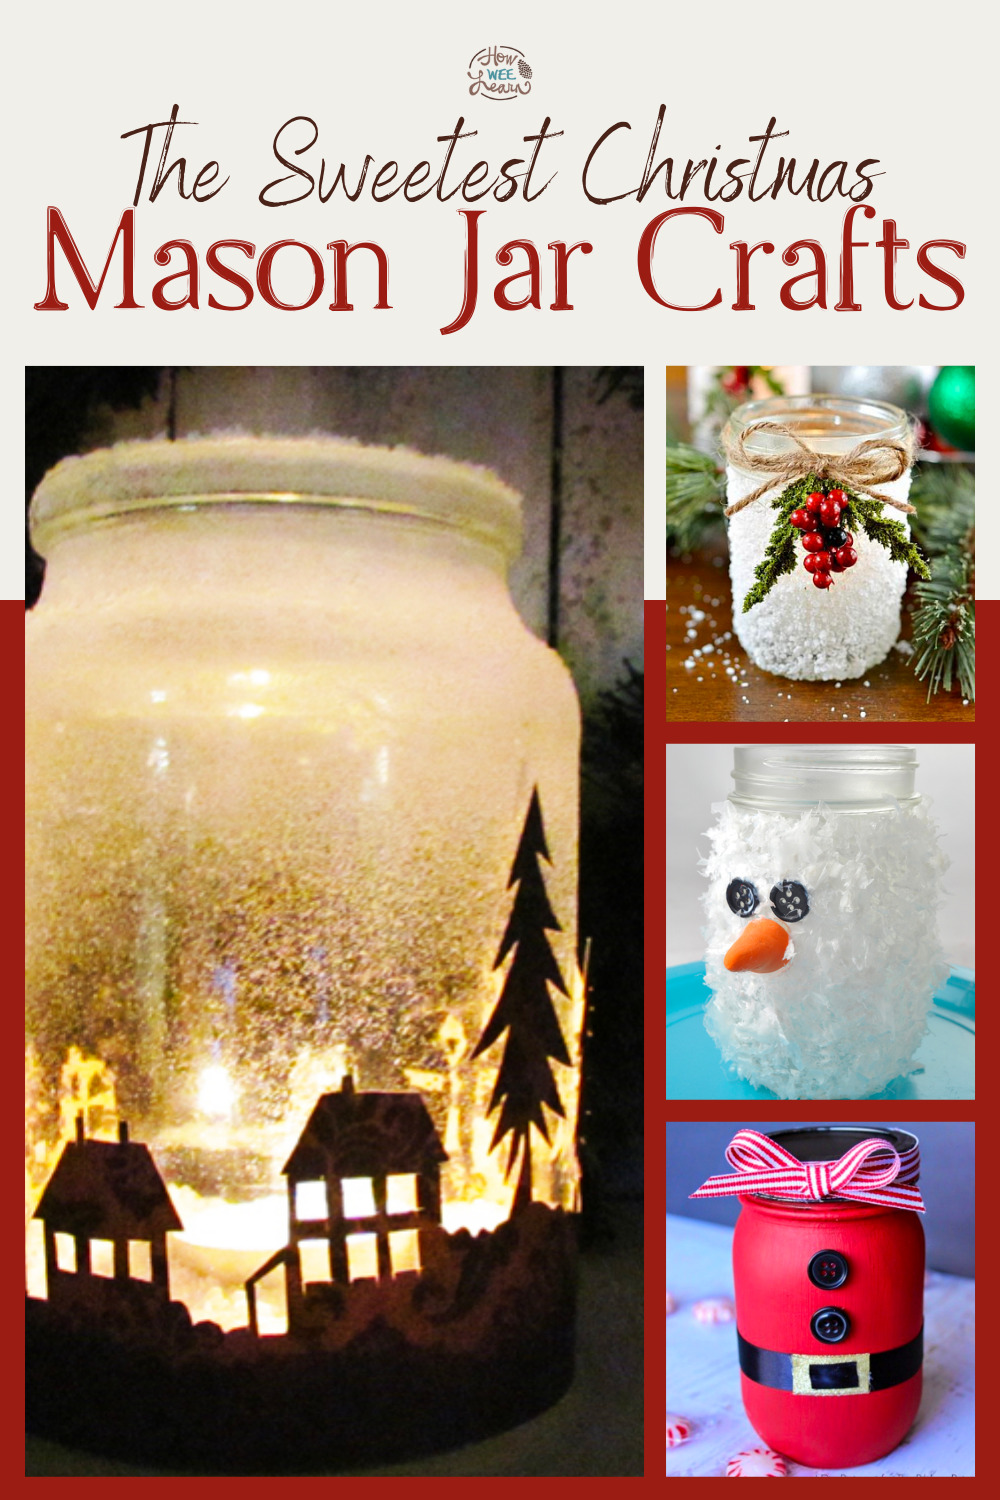 Christmas mason jar crafts to fill with holiday baking